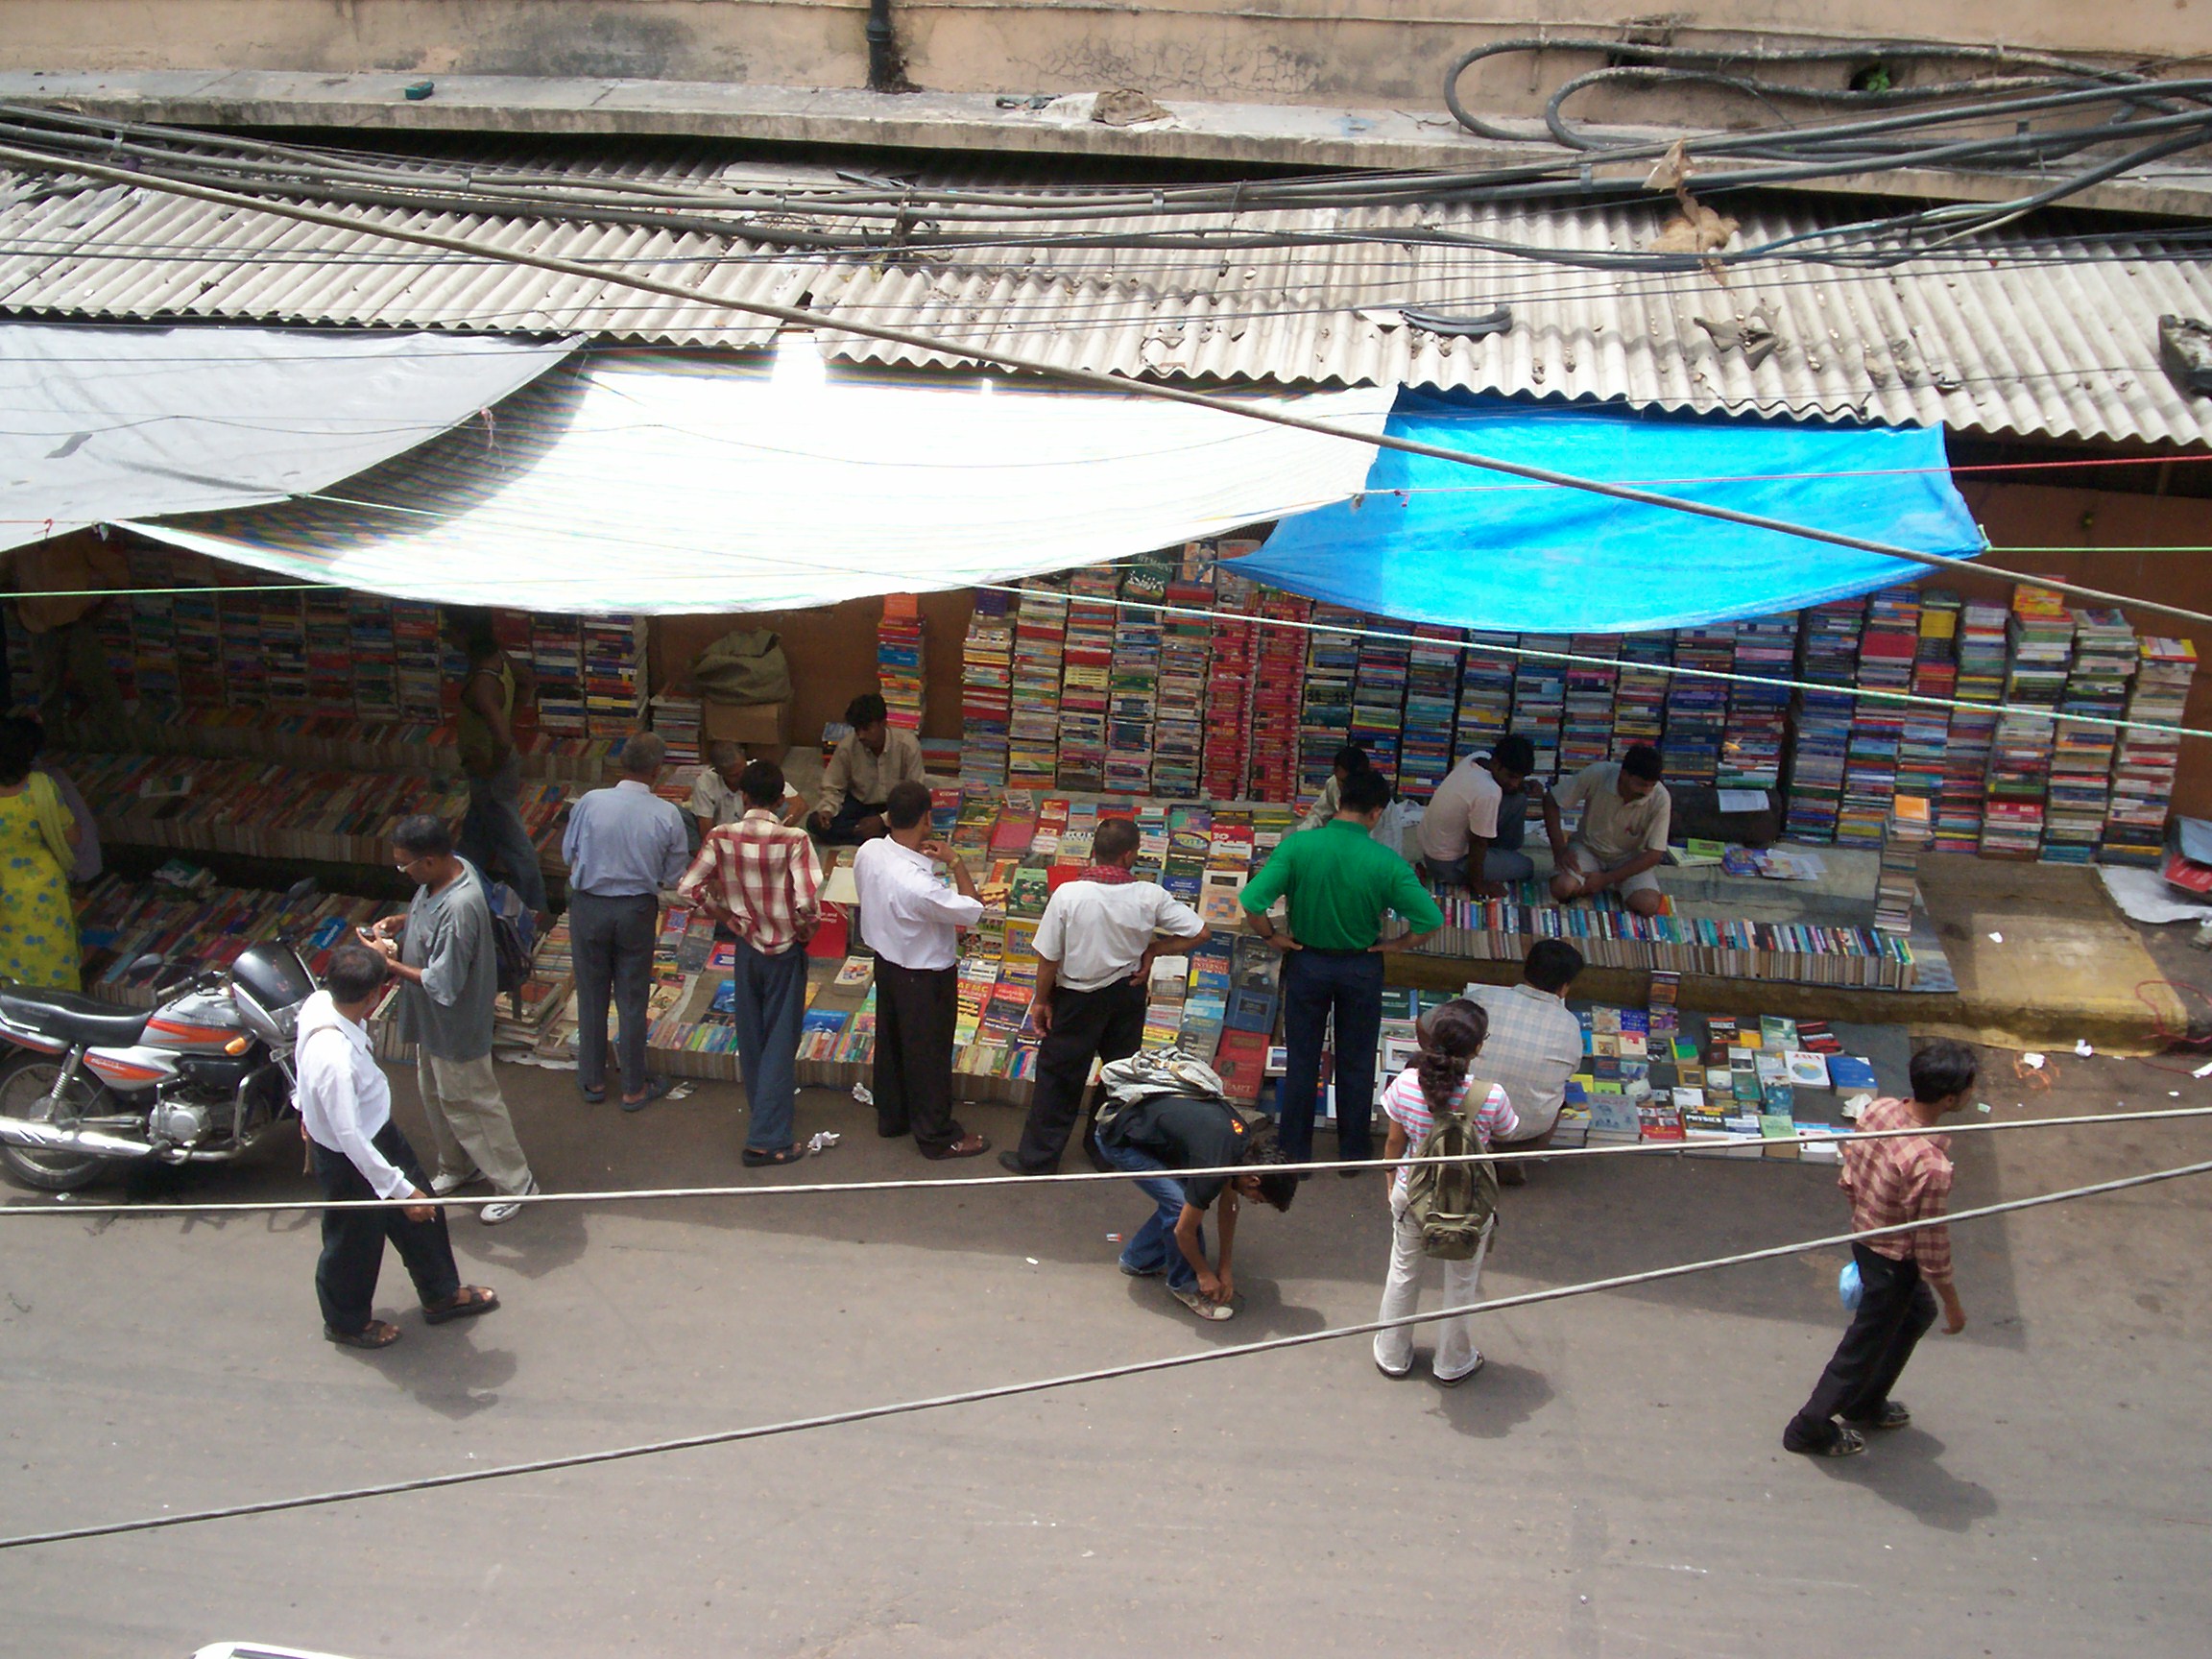 Daryaganj market for second-hand books